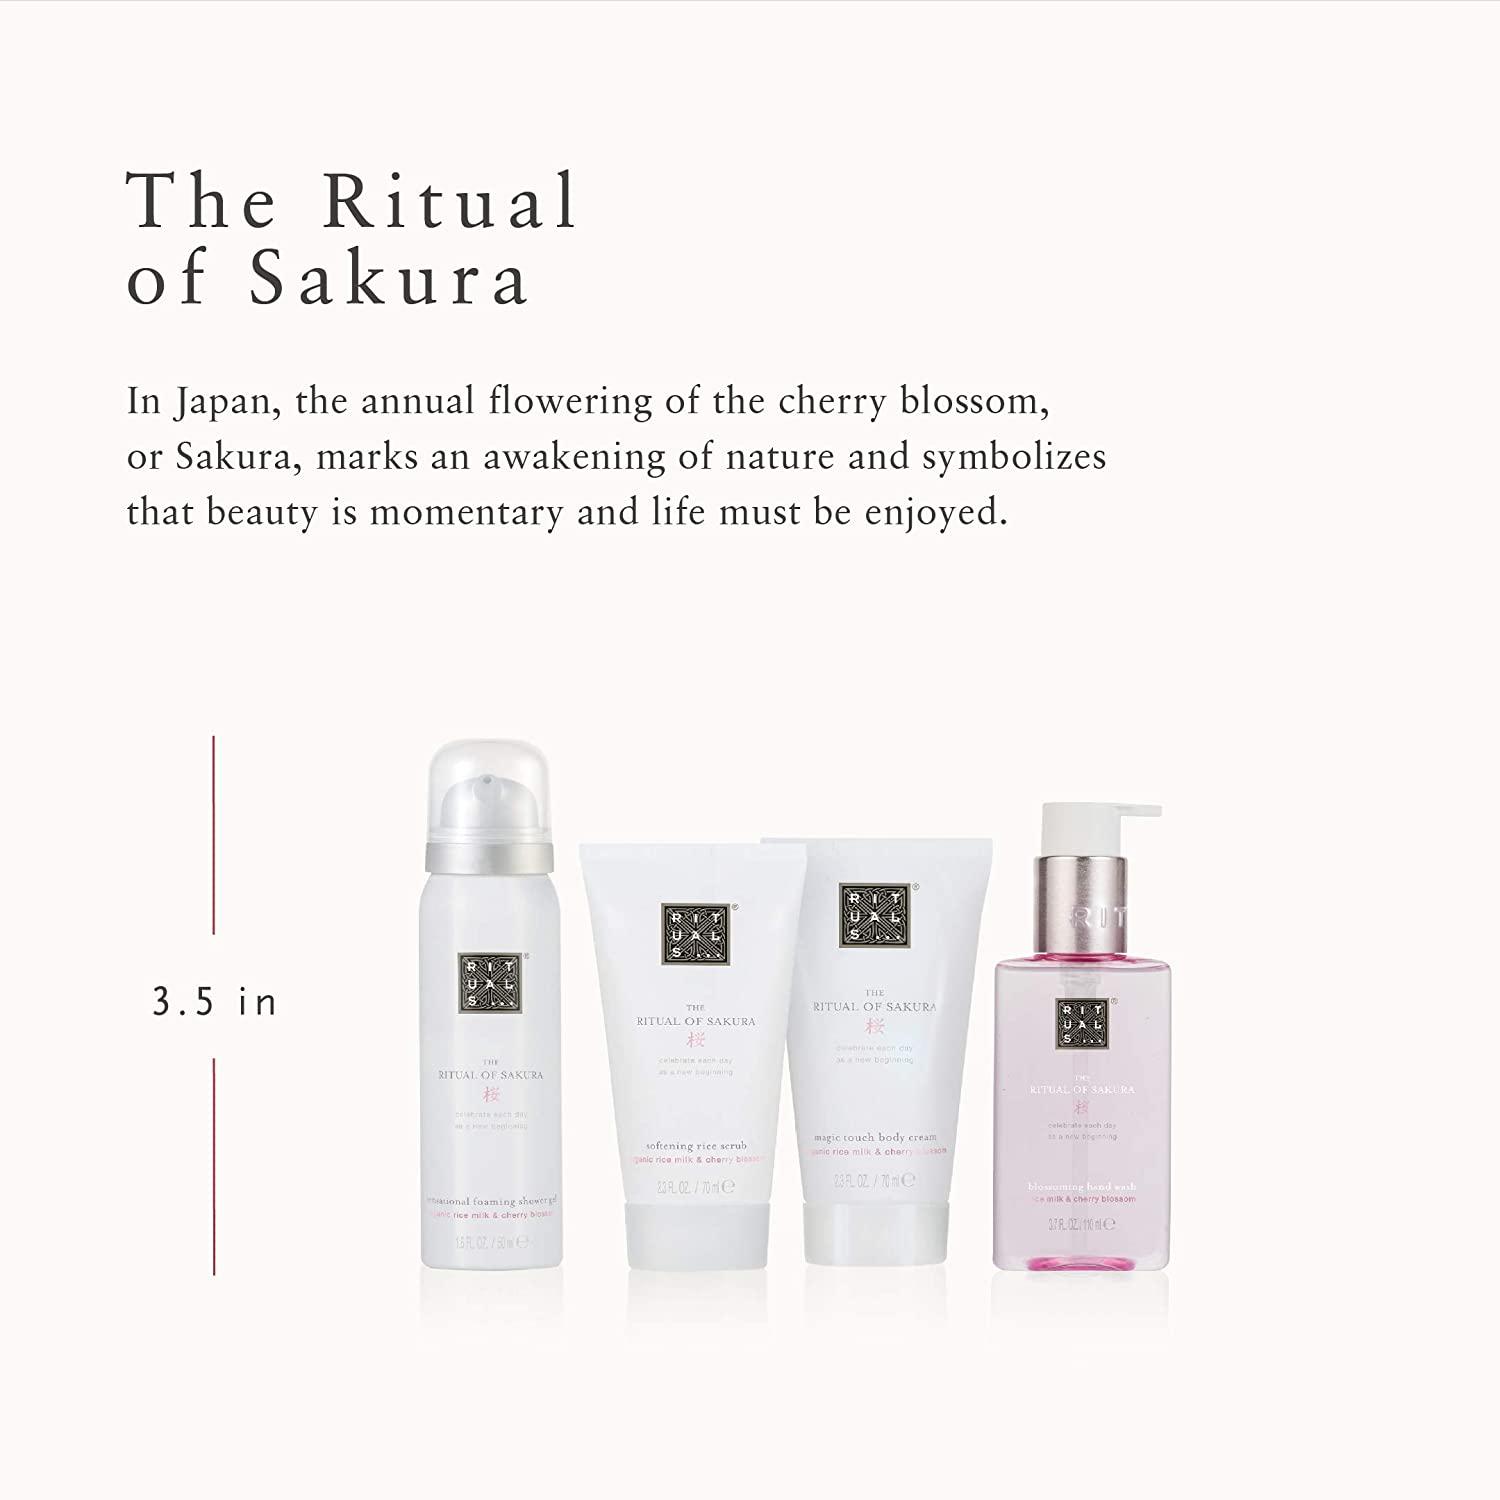 Rituals The Ritual of Sakura Body Skincare Gift Set